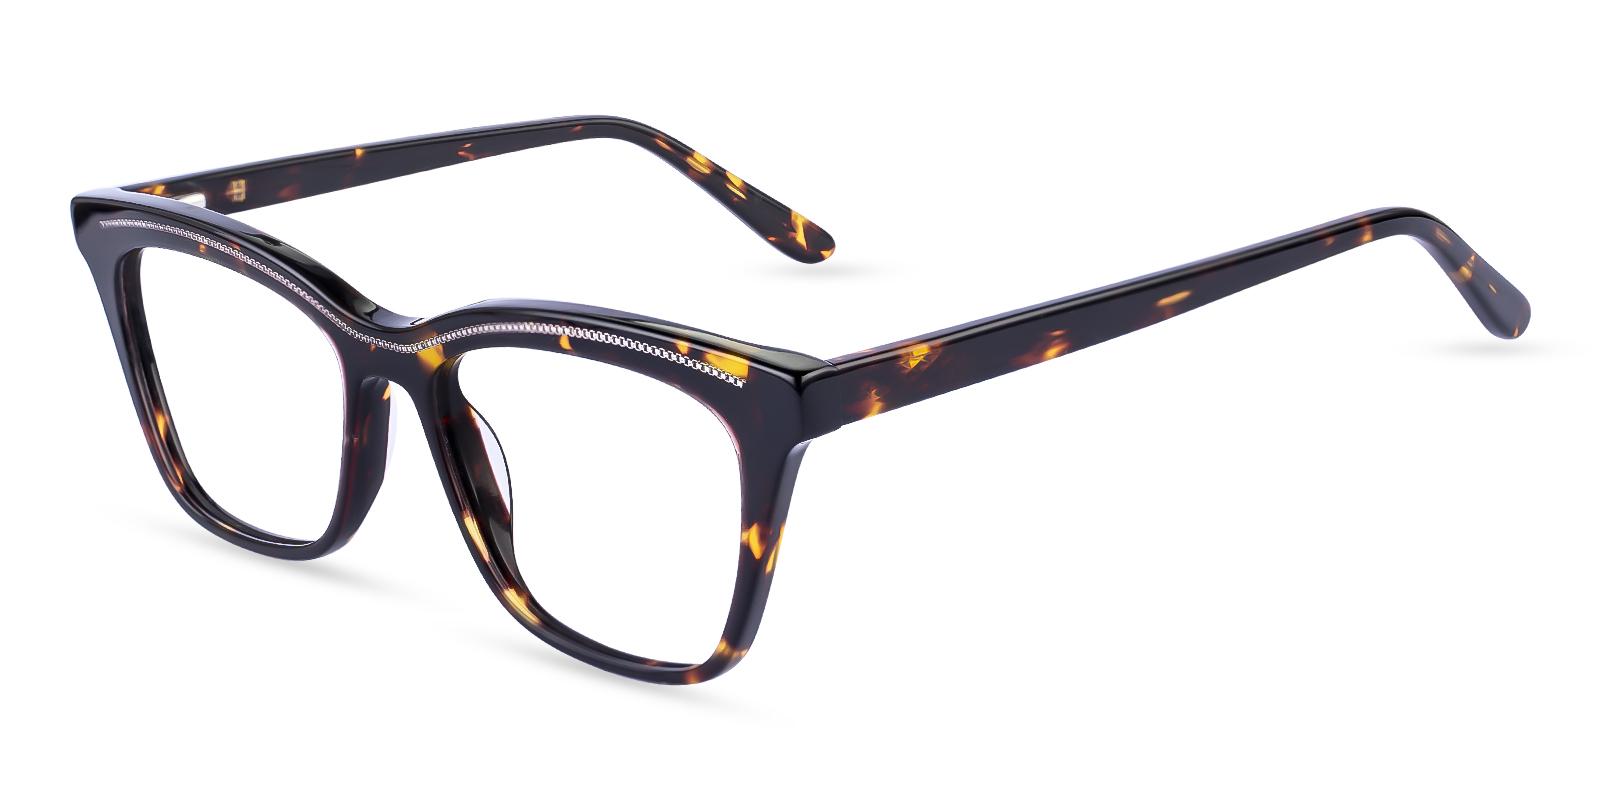 Kate Tortoise Acetate Eyeglasses , Fashion , SpringHinges , UniversalBridgeFit Frames from ABBE Glasses